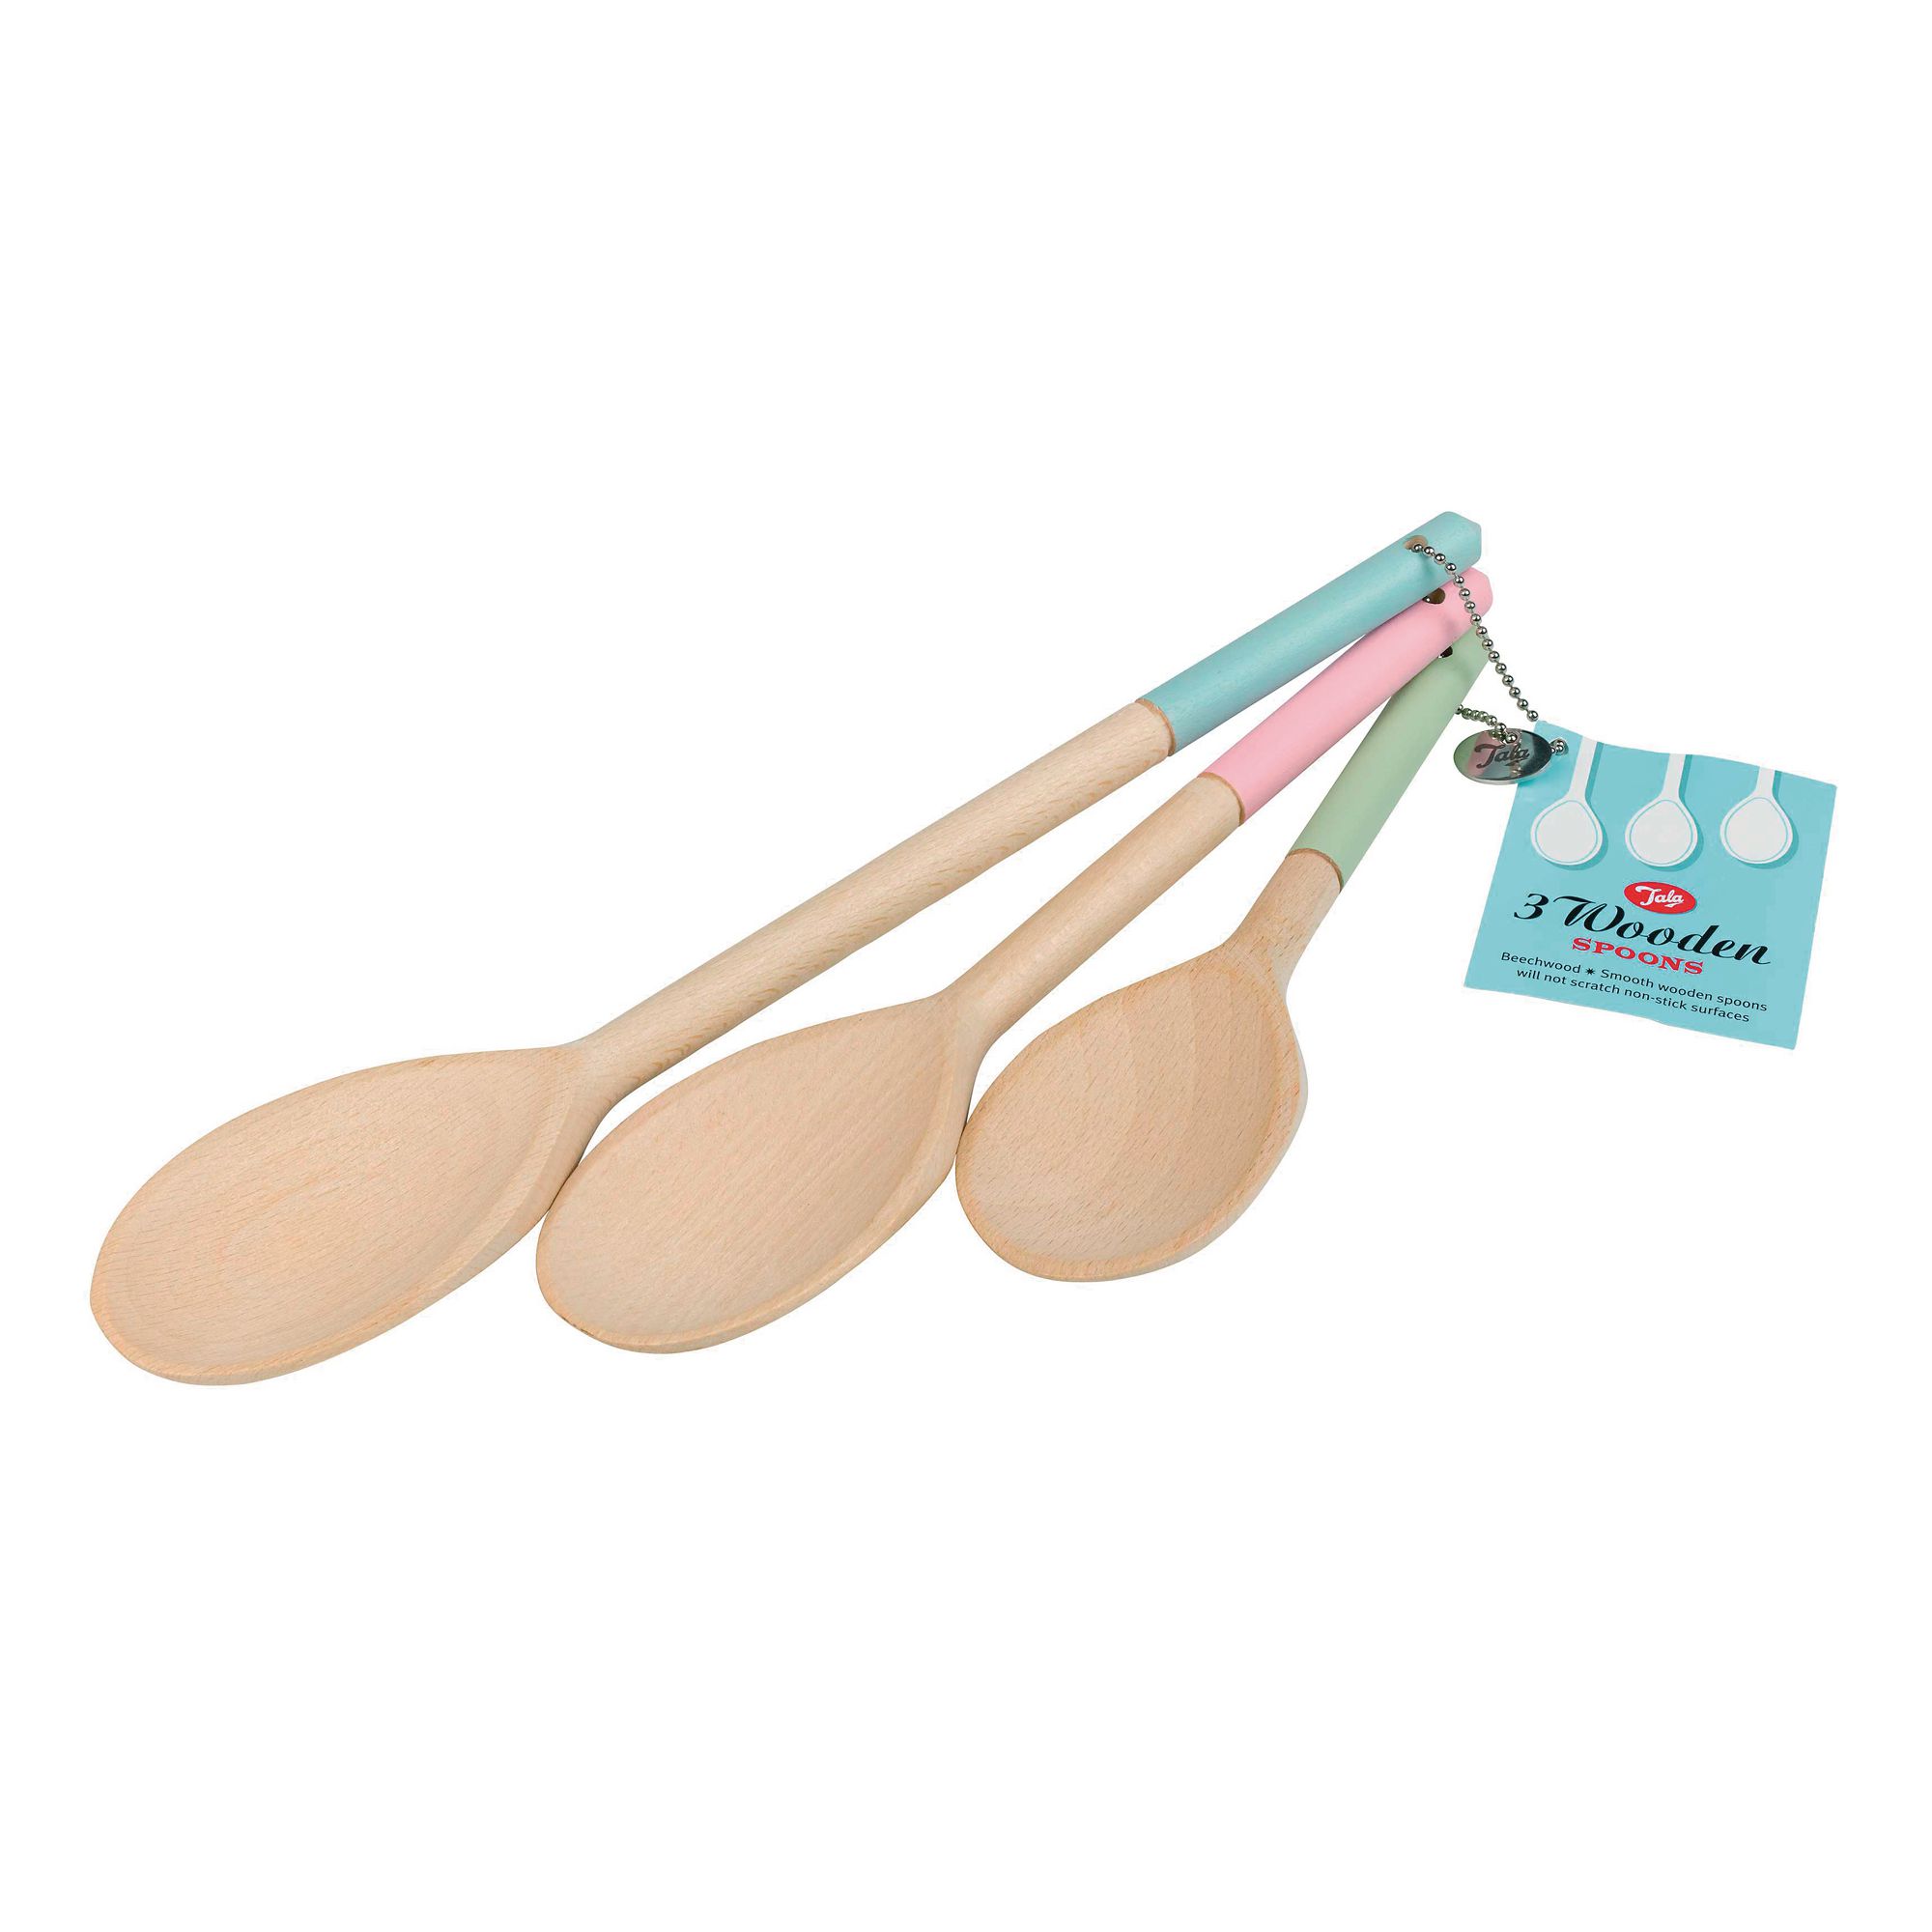 Set 3 Wooden Spoons